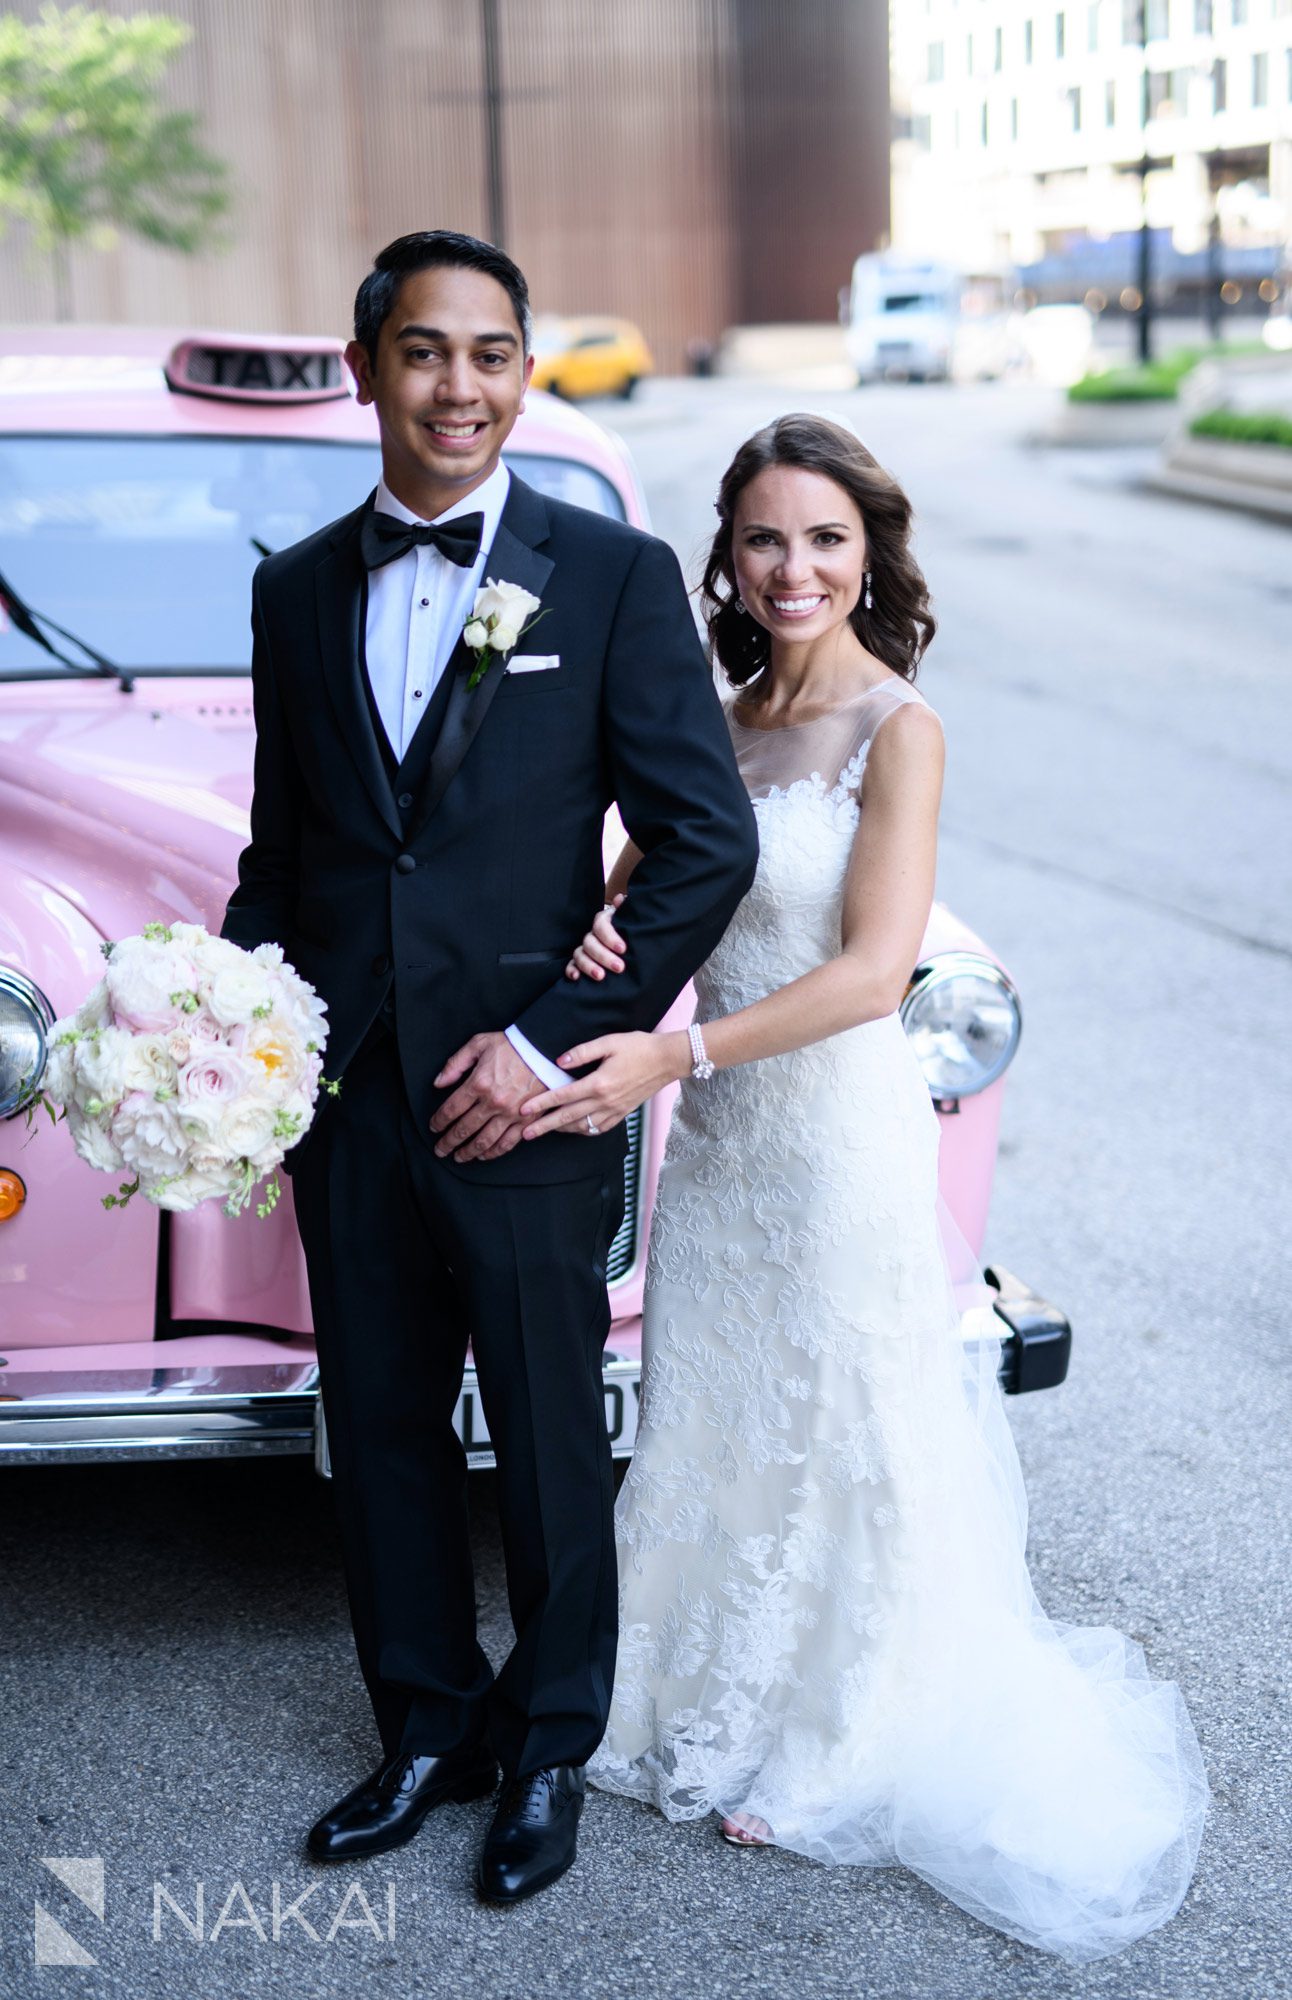 langham Chicago wedding picture pink taxi bride groom